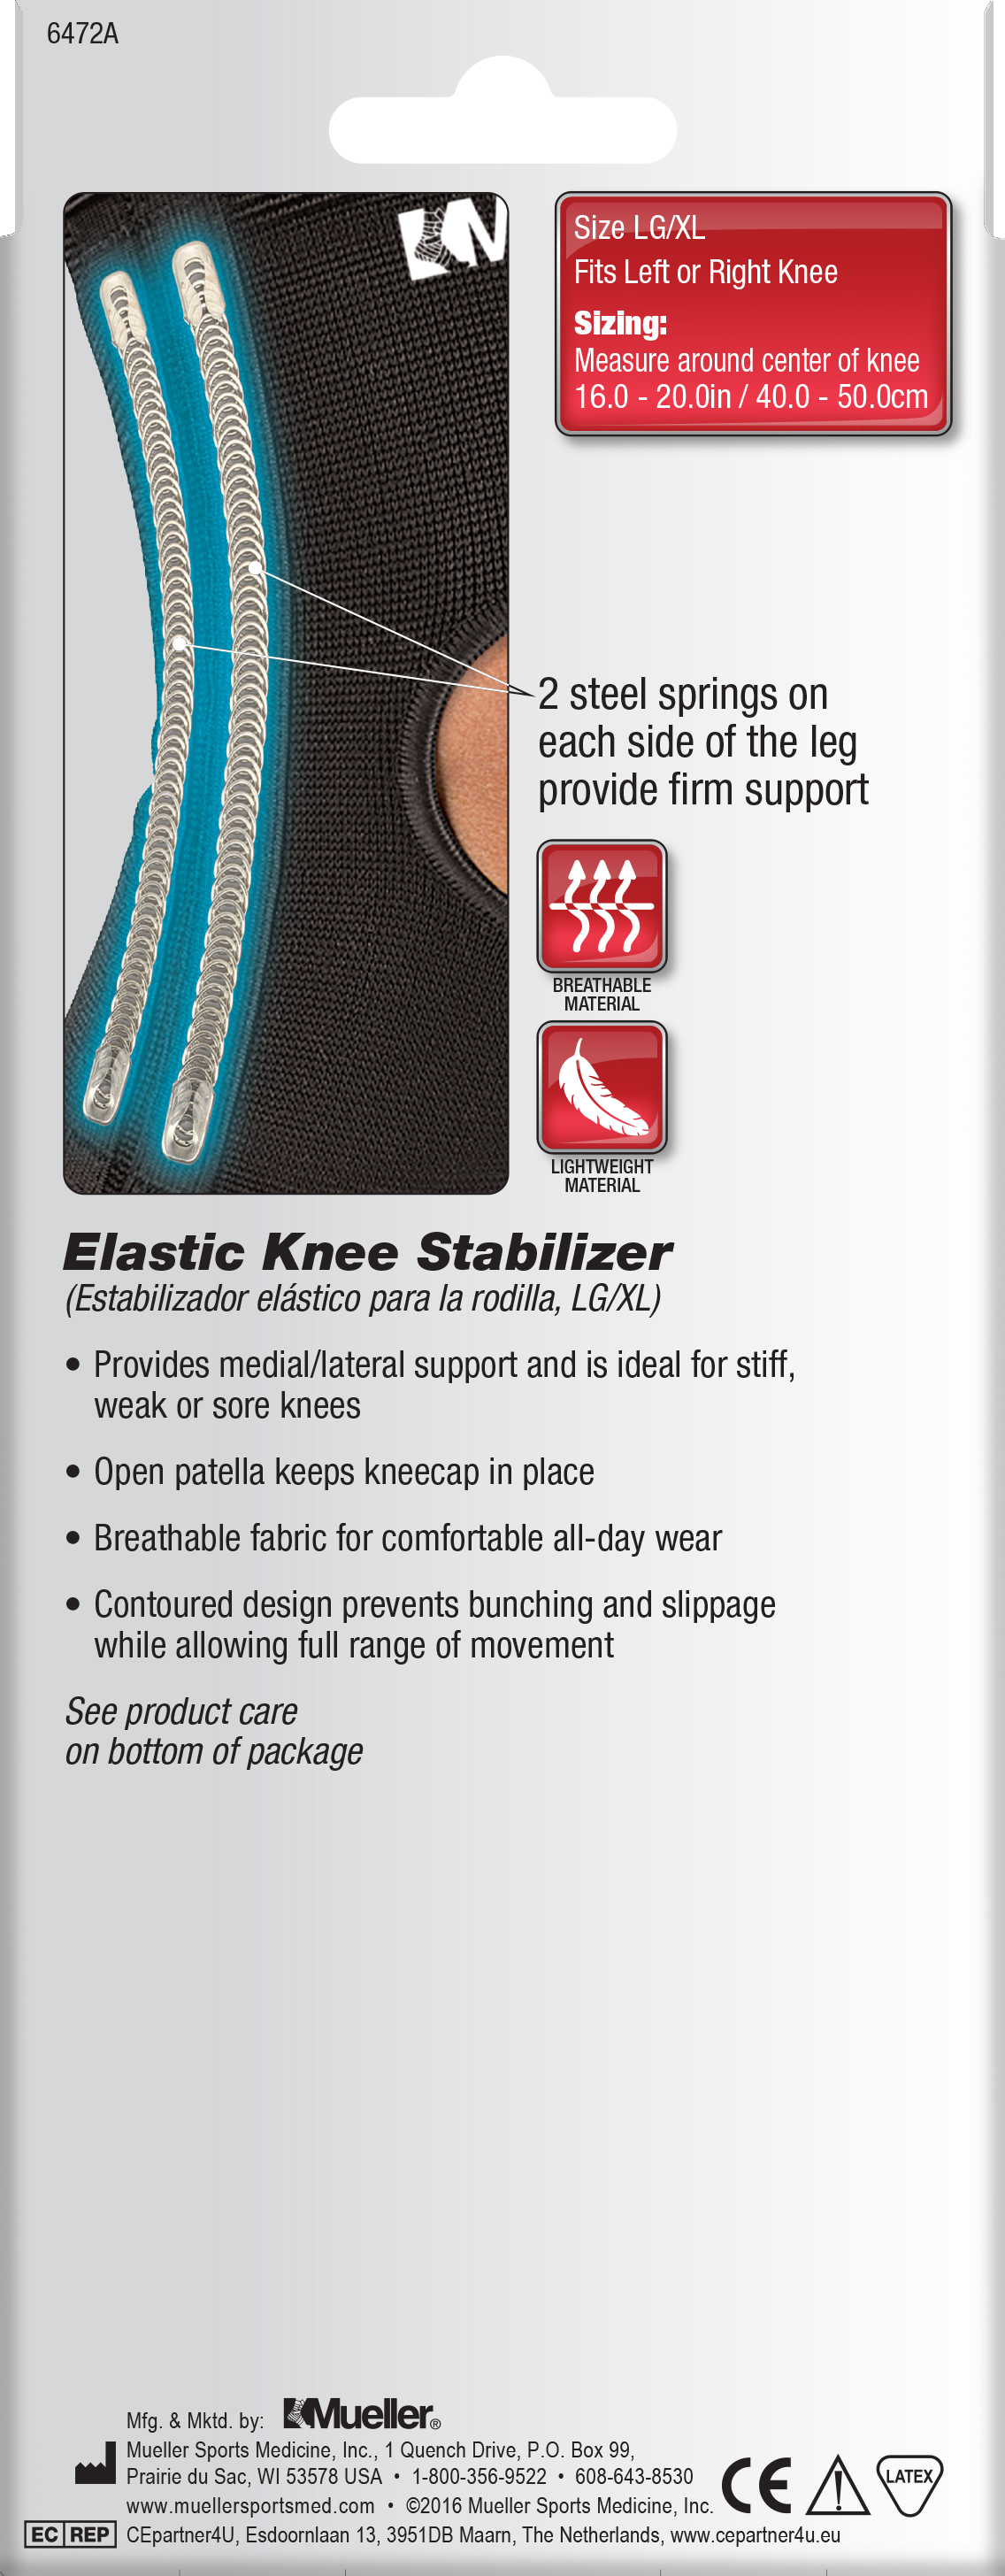 Mueller Elastic Knee Stabilizer, Black, Large/Extra Large - image 3 of 10